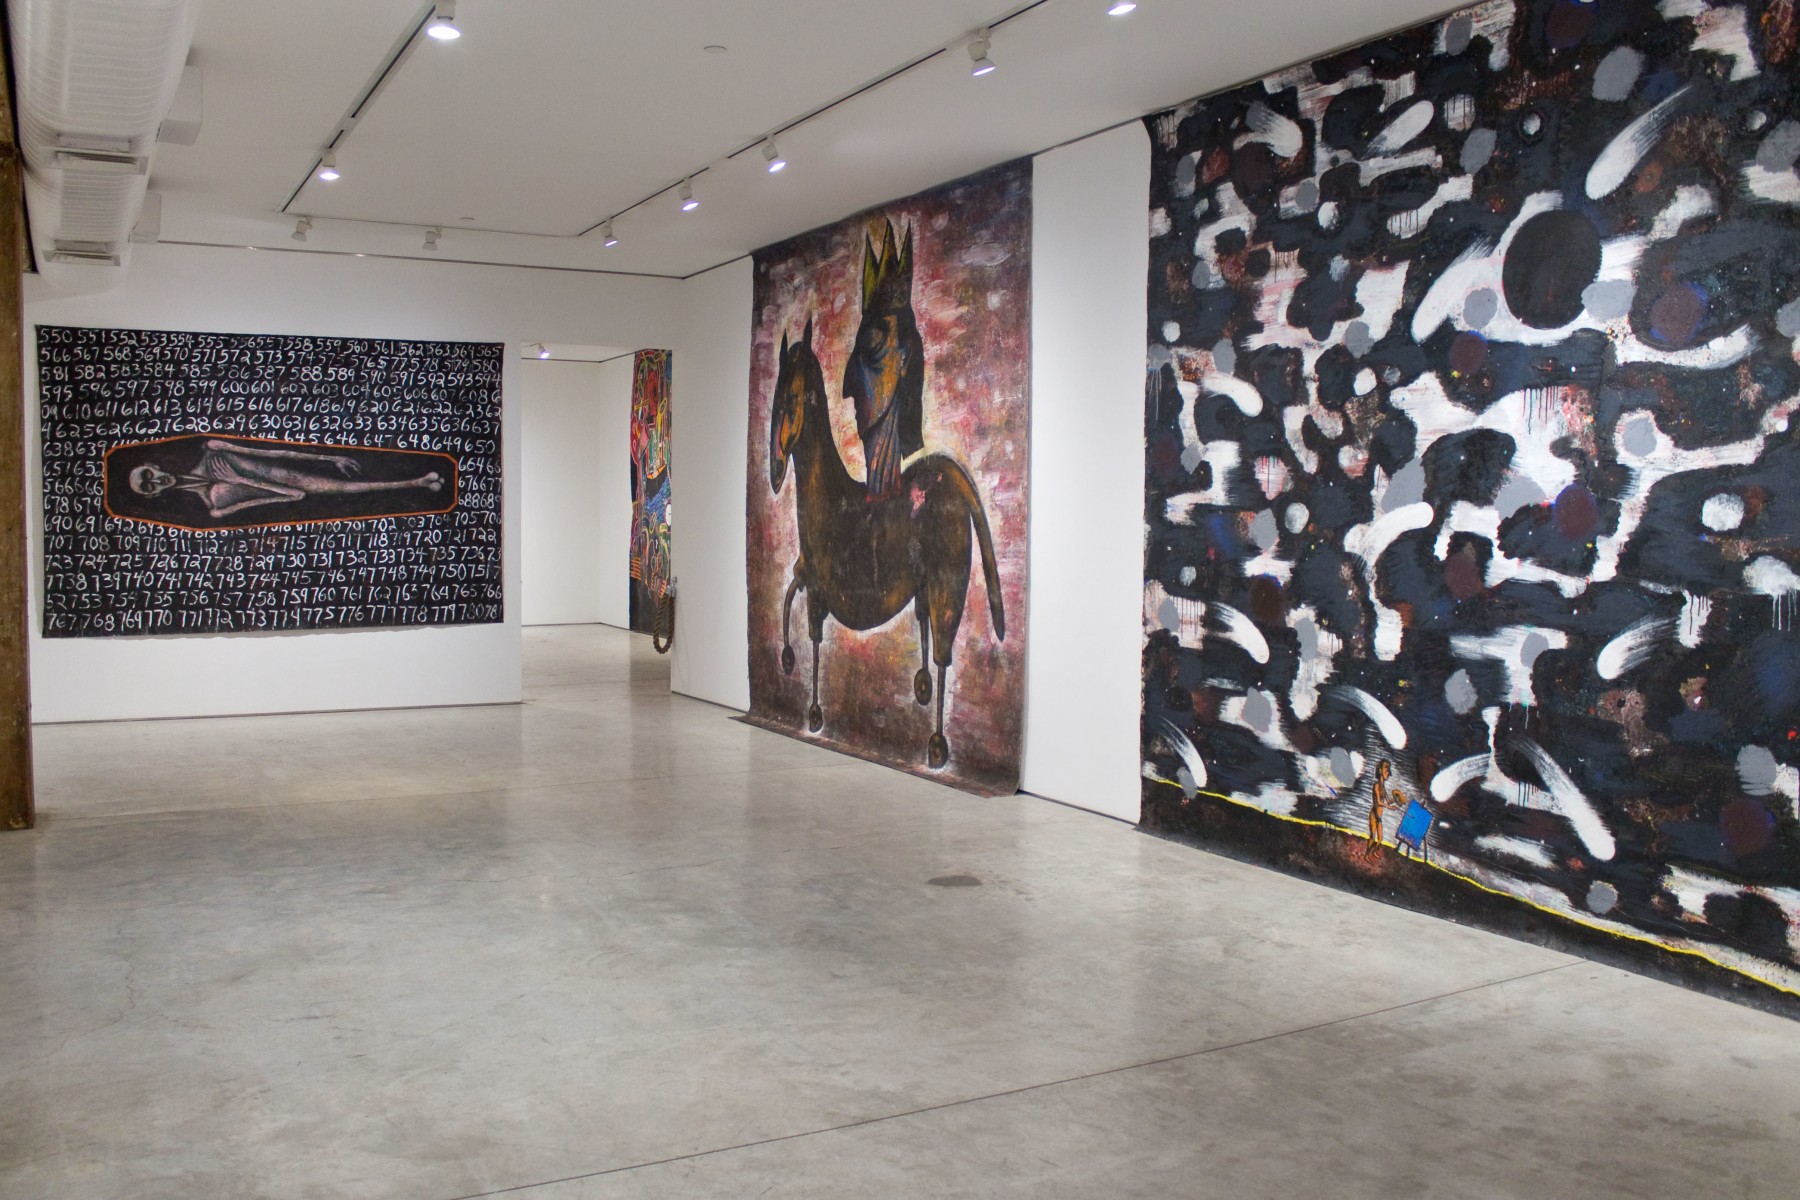 Installation view, Luis Cruz Azaceta: 1984-1989, George Adams Gallery, New York, 2018